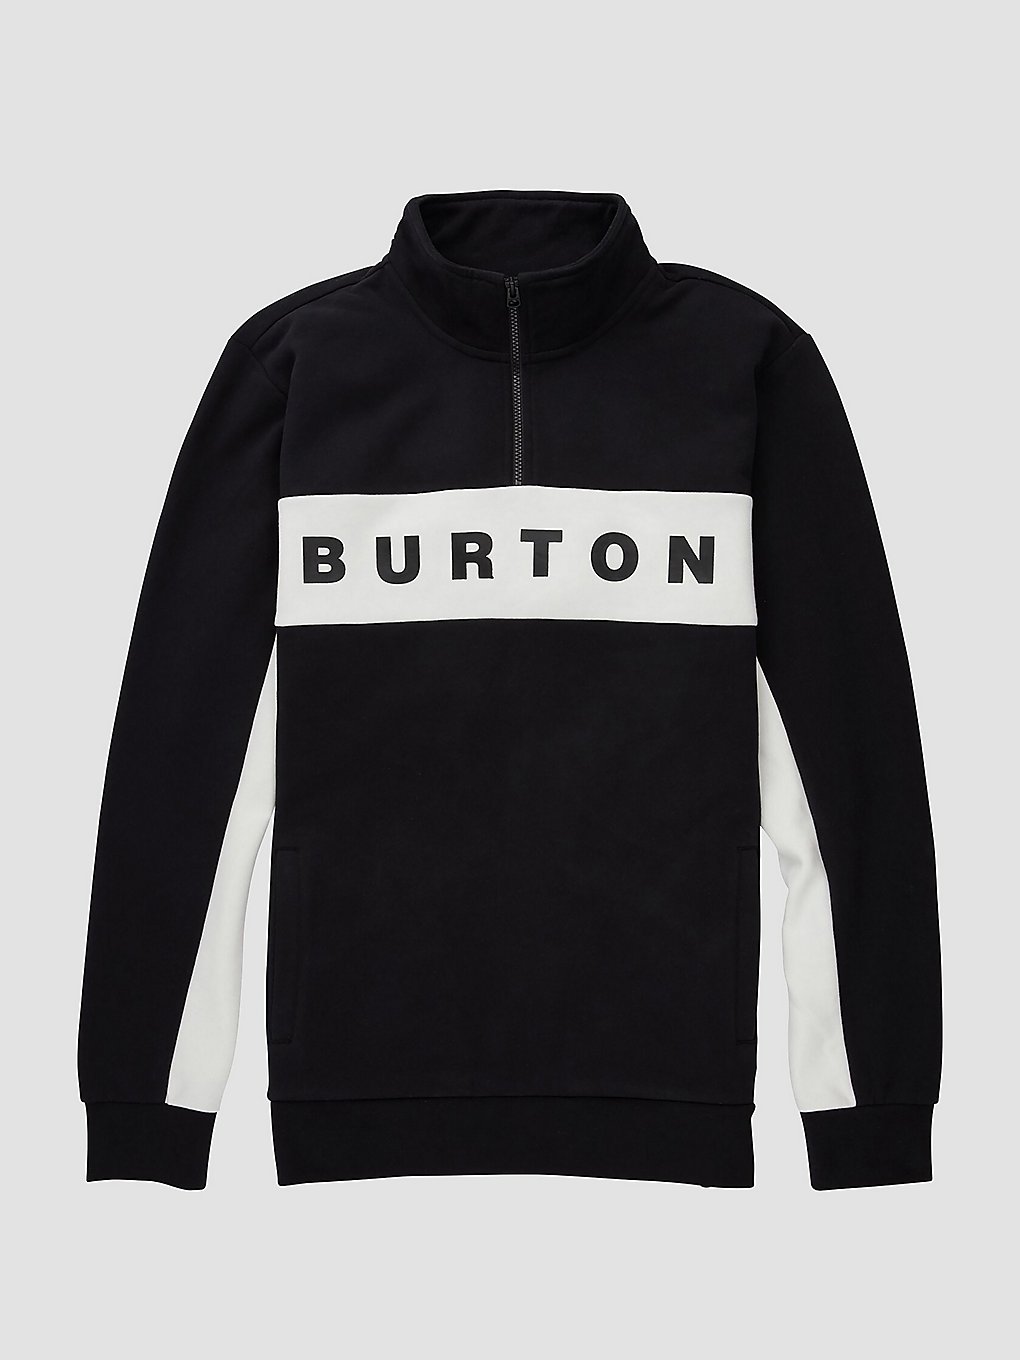 Burton Lowball 1/4 Zip Sweater true black kaufen